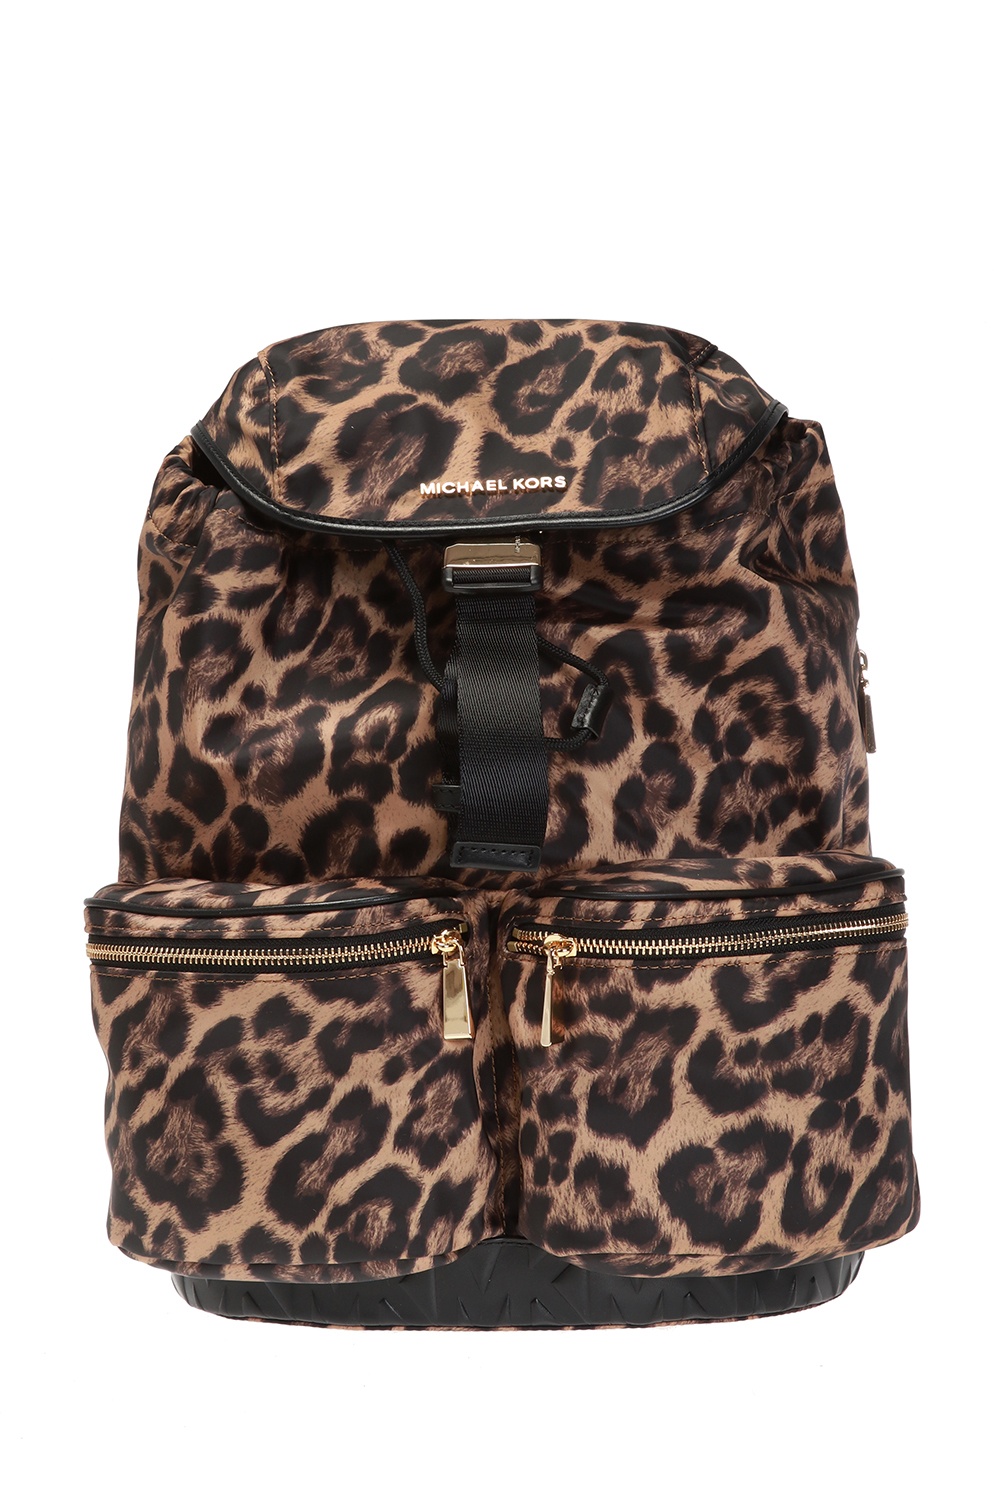 leopard michael kors backpack